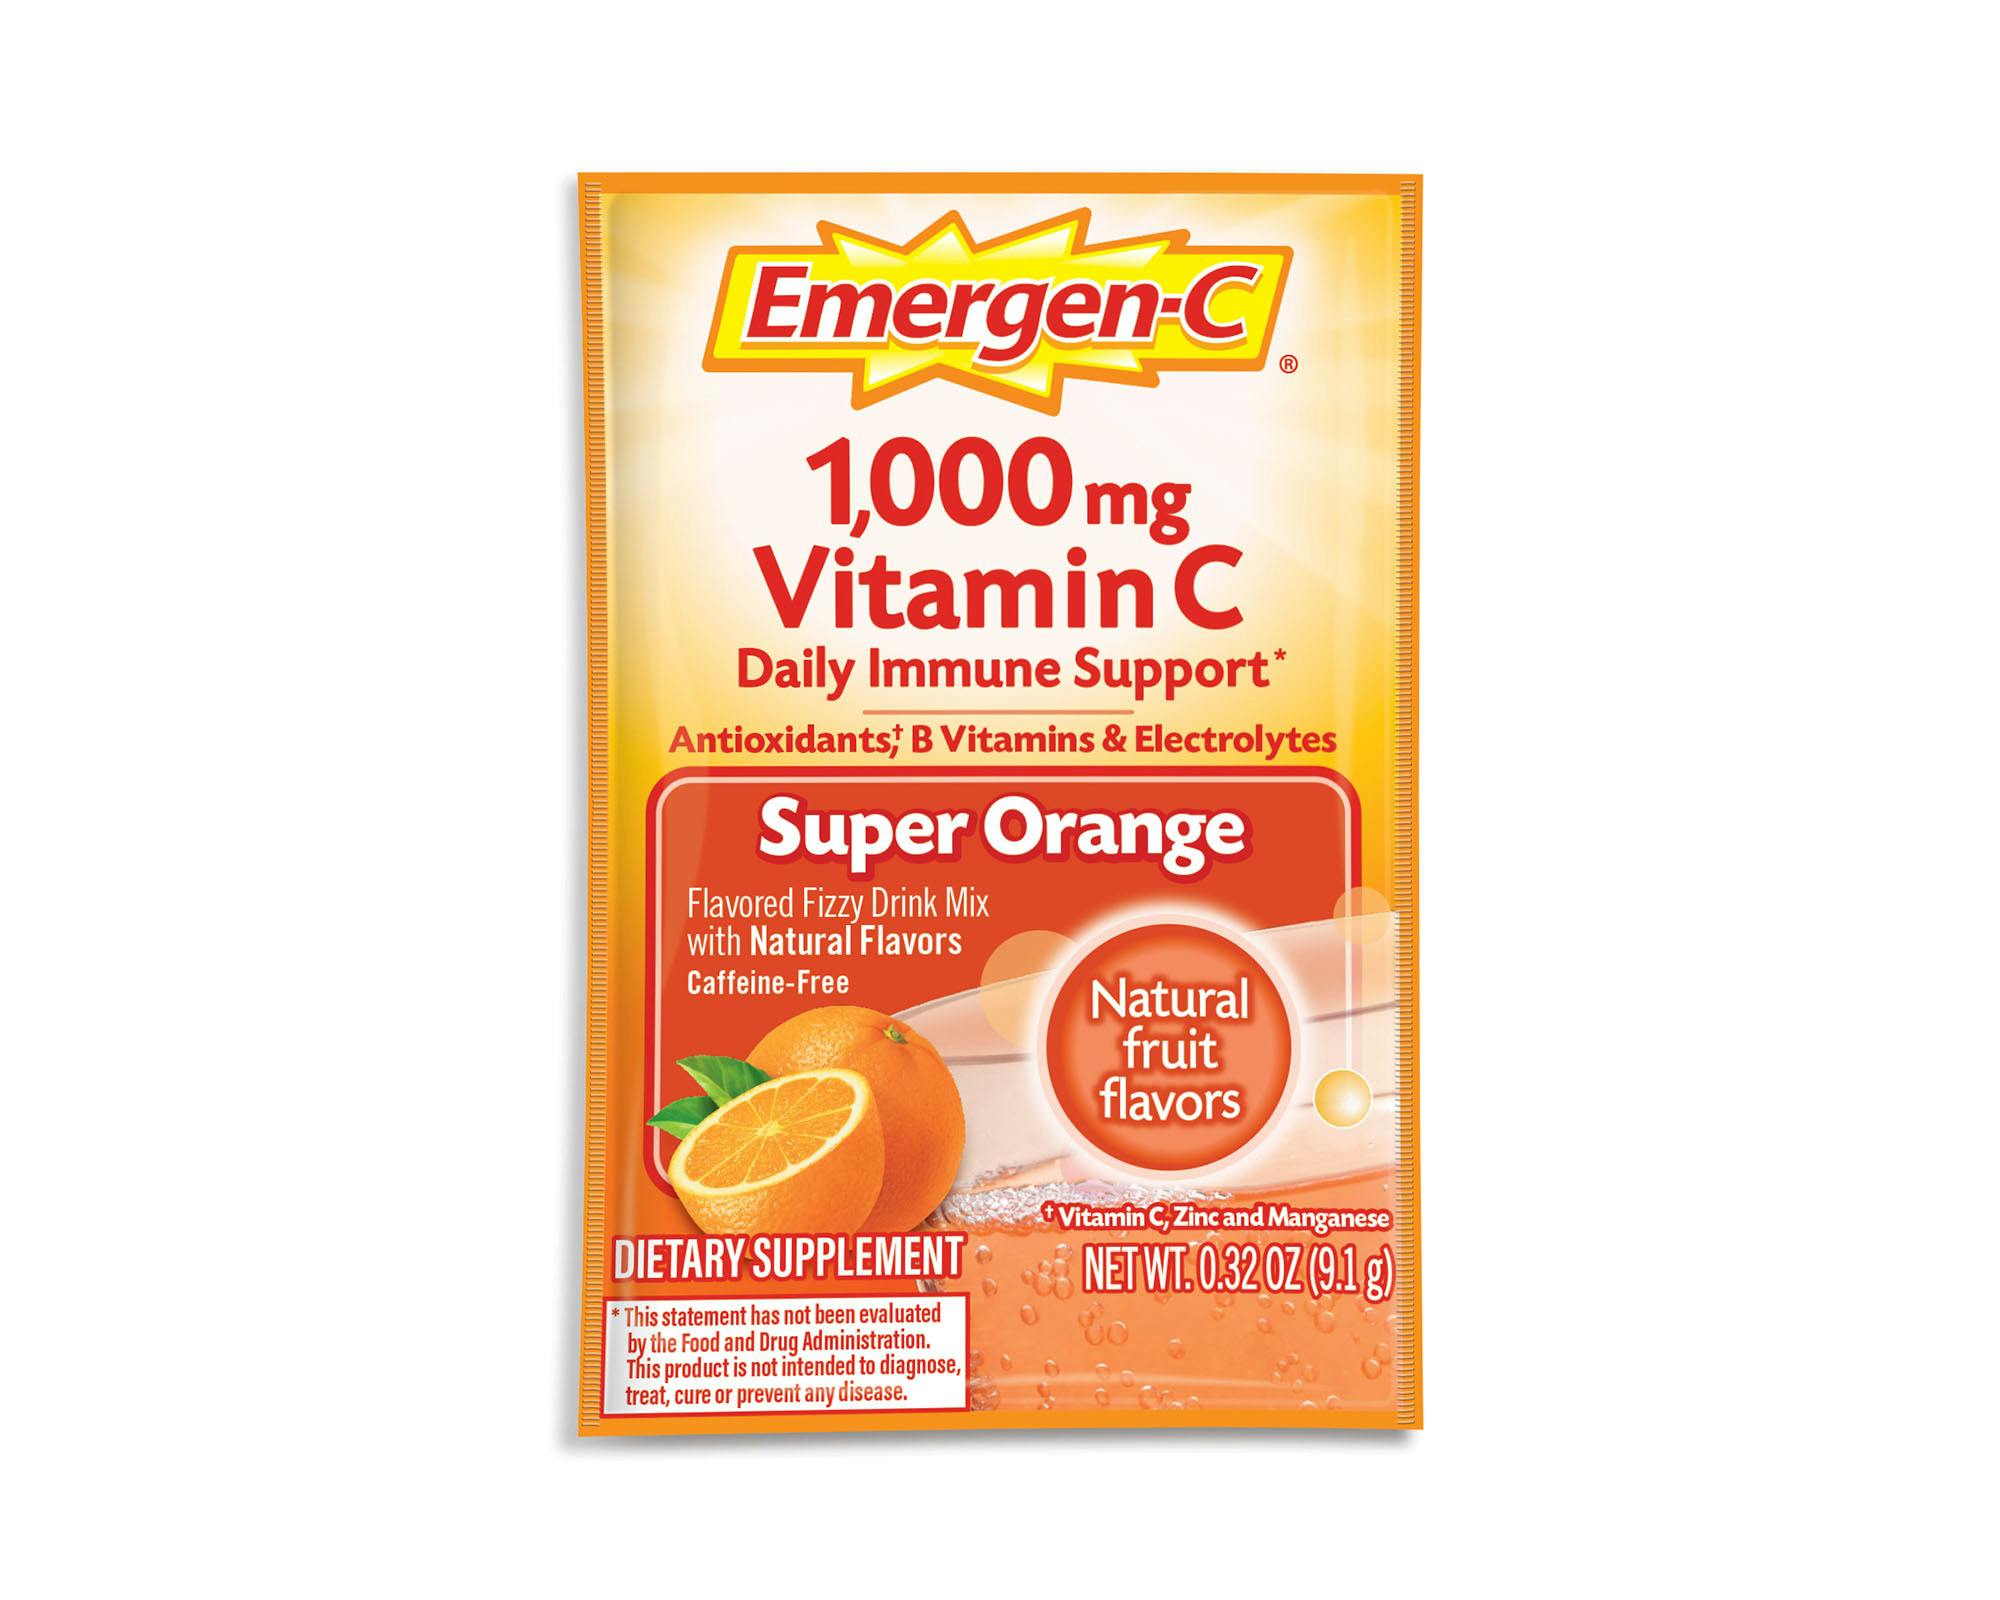 Super Orange Original Formula Immune Support packet